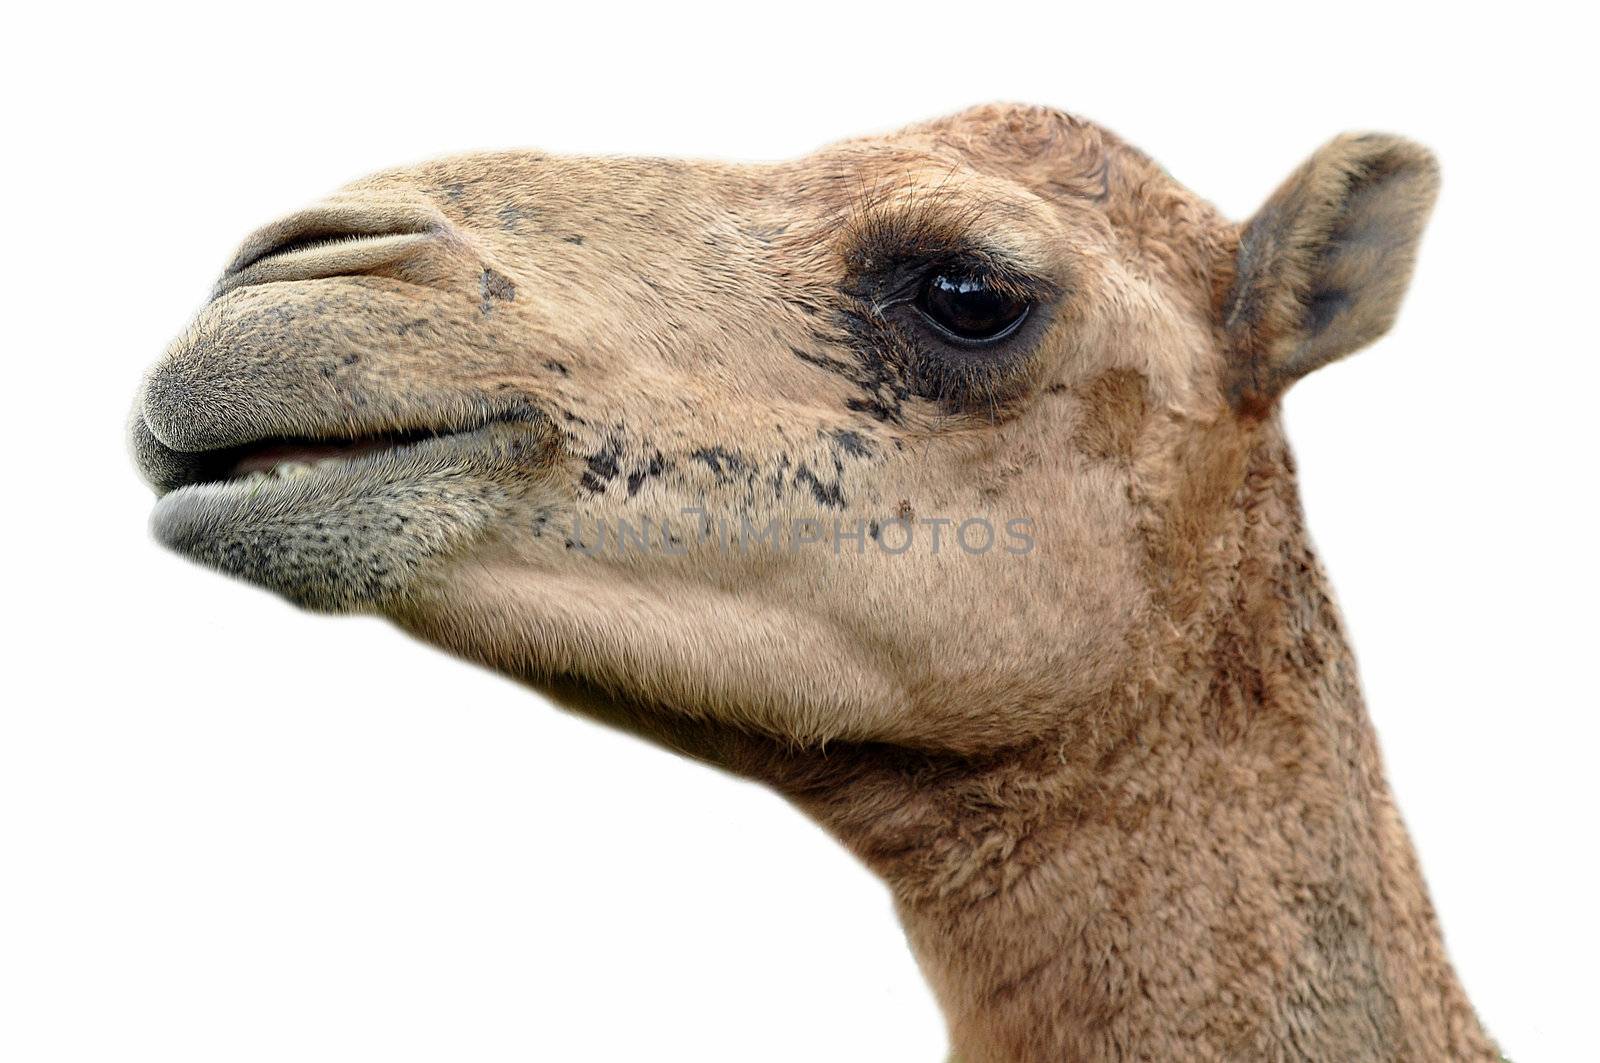 Arabian camel by MaZiKab